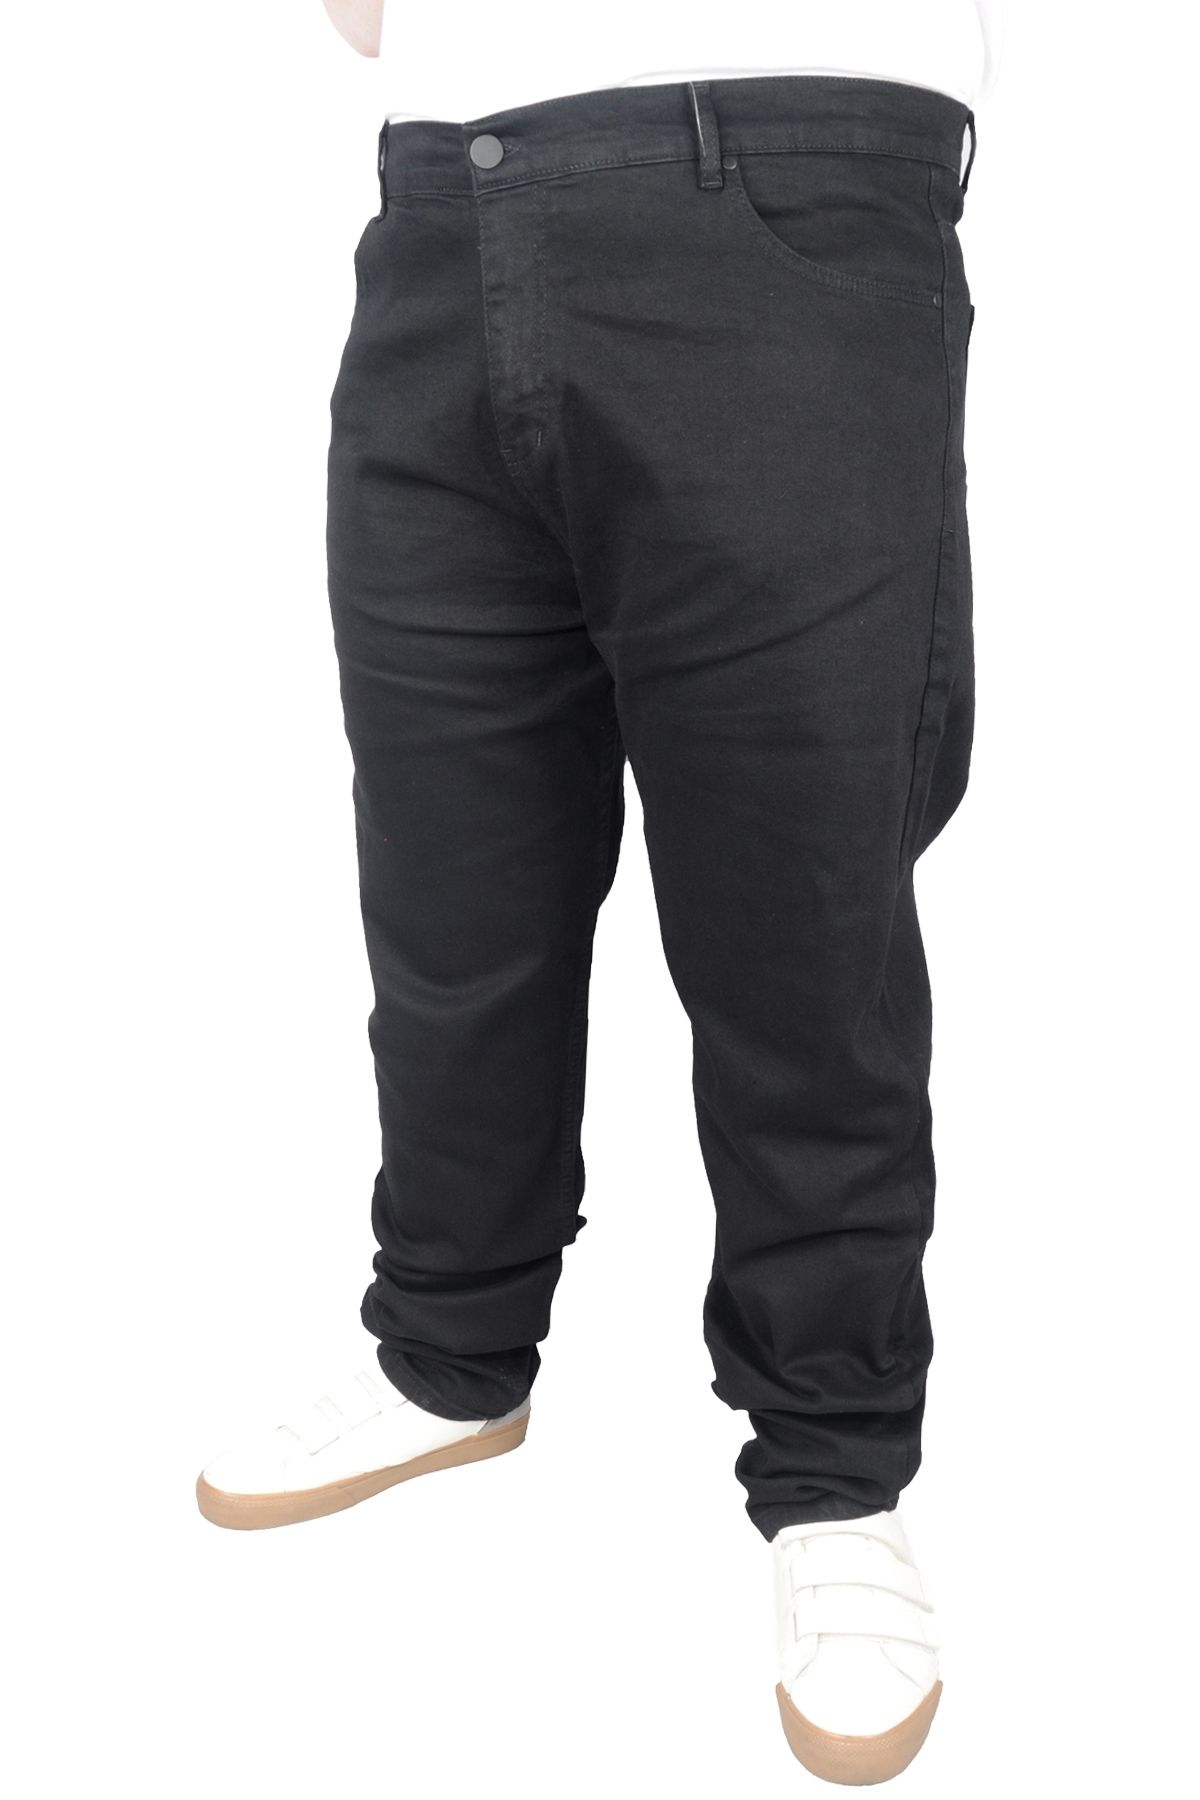 Modexl Mode Xl Büyük Beden Erkek Pantolon Kot Black 21920 Siyah